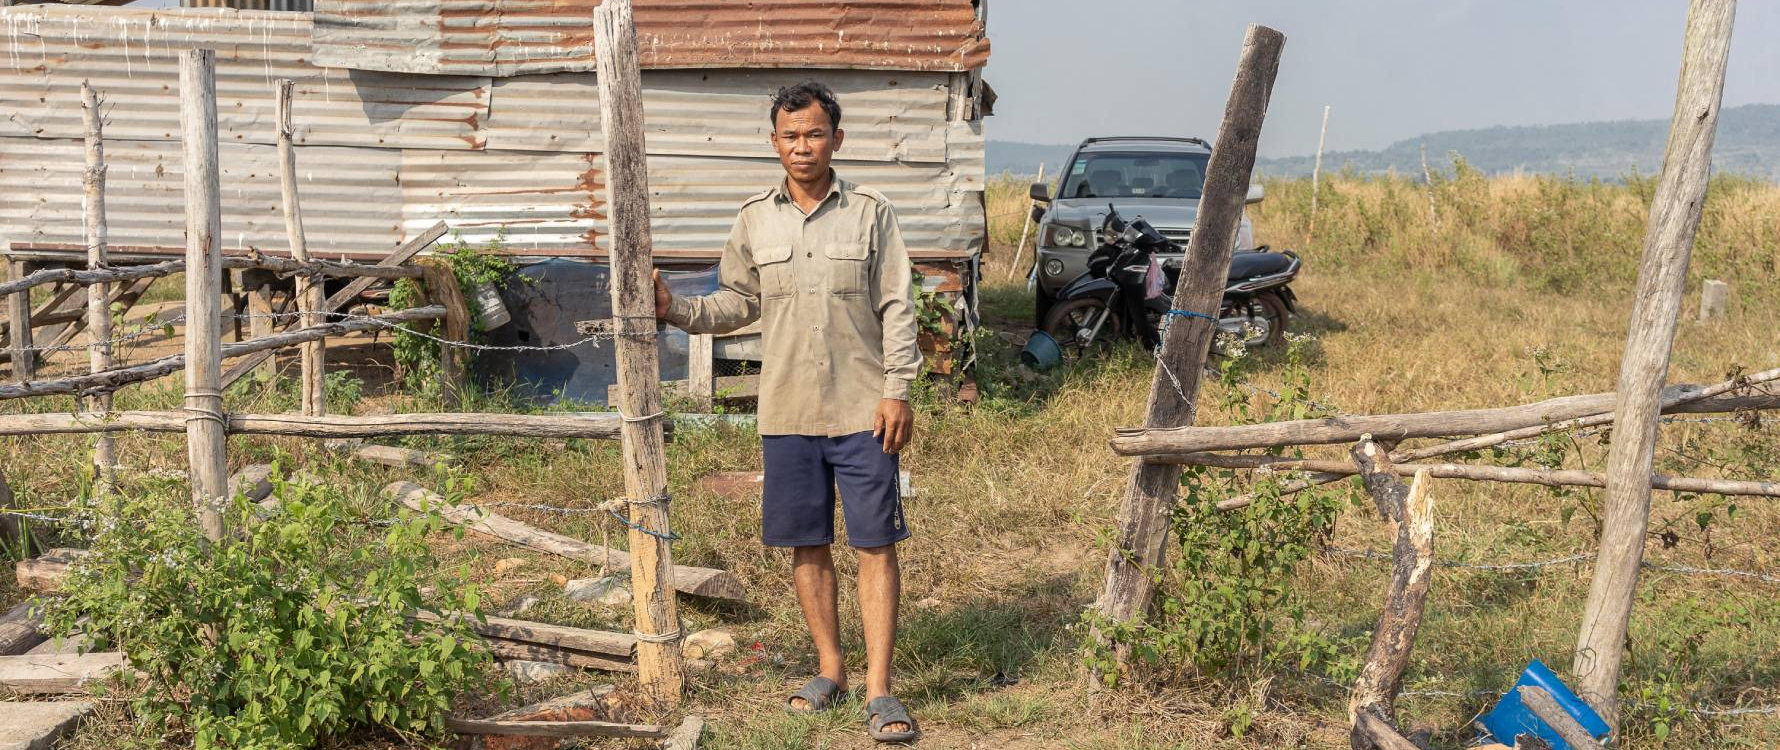 Firma de alimentos británica acusada de traición a familias en Camboya